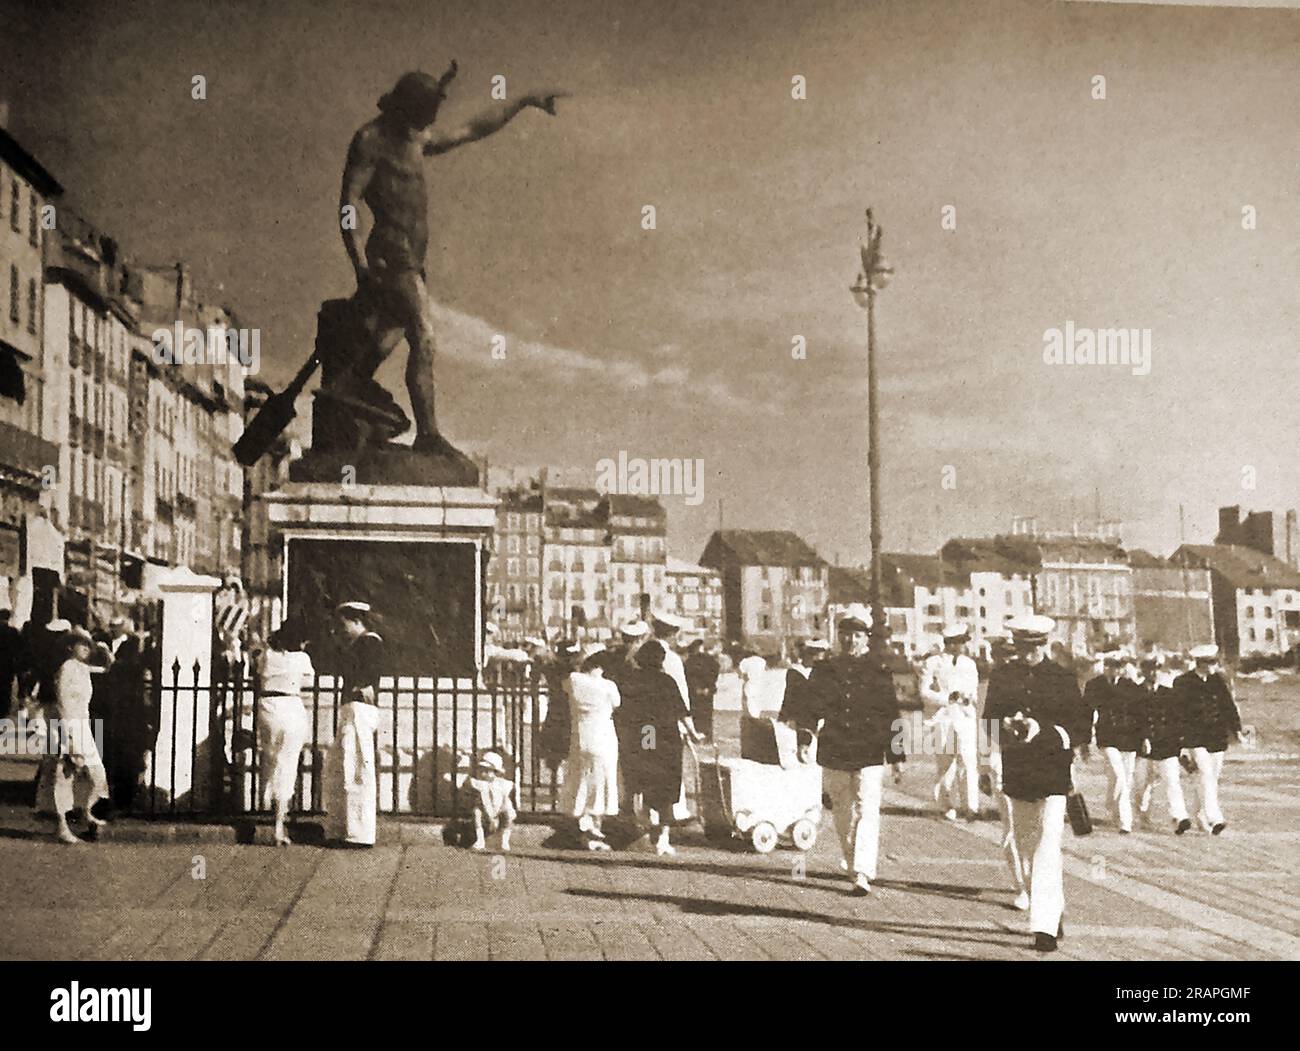 A Scene on the Quai Kroonstad) alias Cronstadt Wharf & :Quai Cronstadtin), Toulon, Frankreich 1939.- Une vieille scène sur le quai Kroonstad à Toulon, Frankreich en 1939. Stockfoto